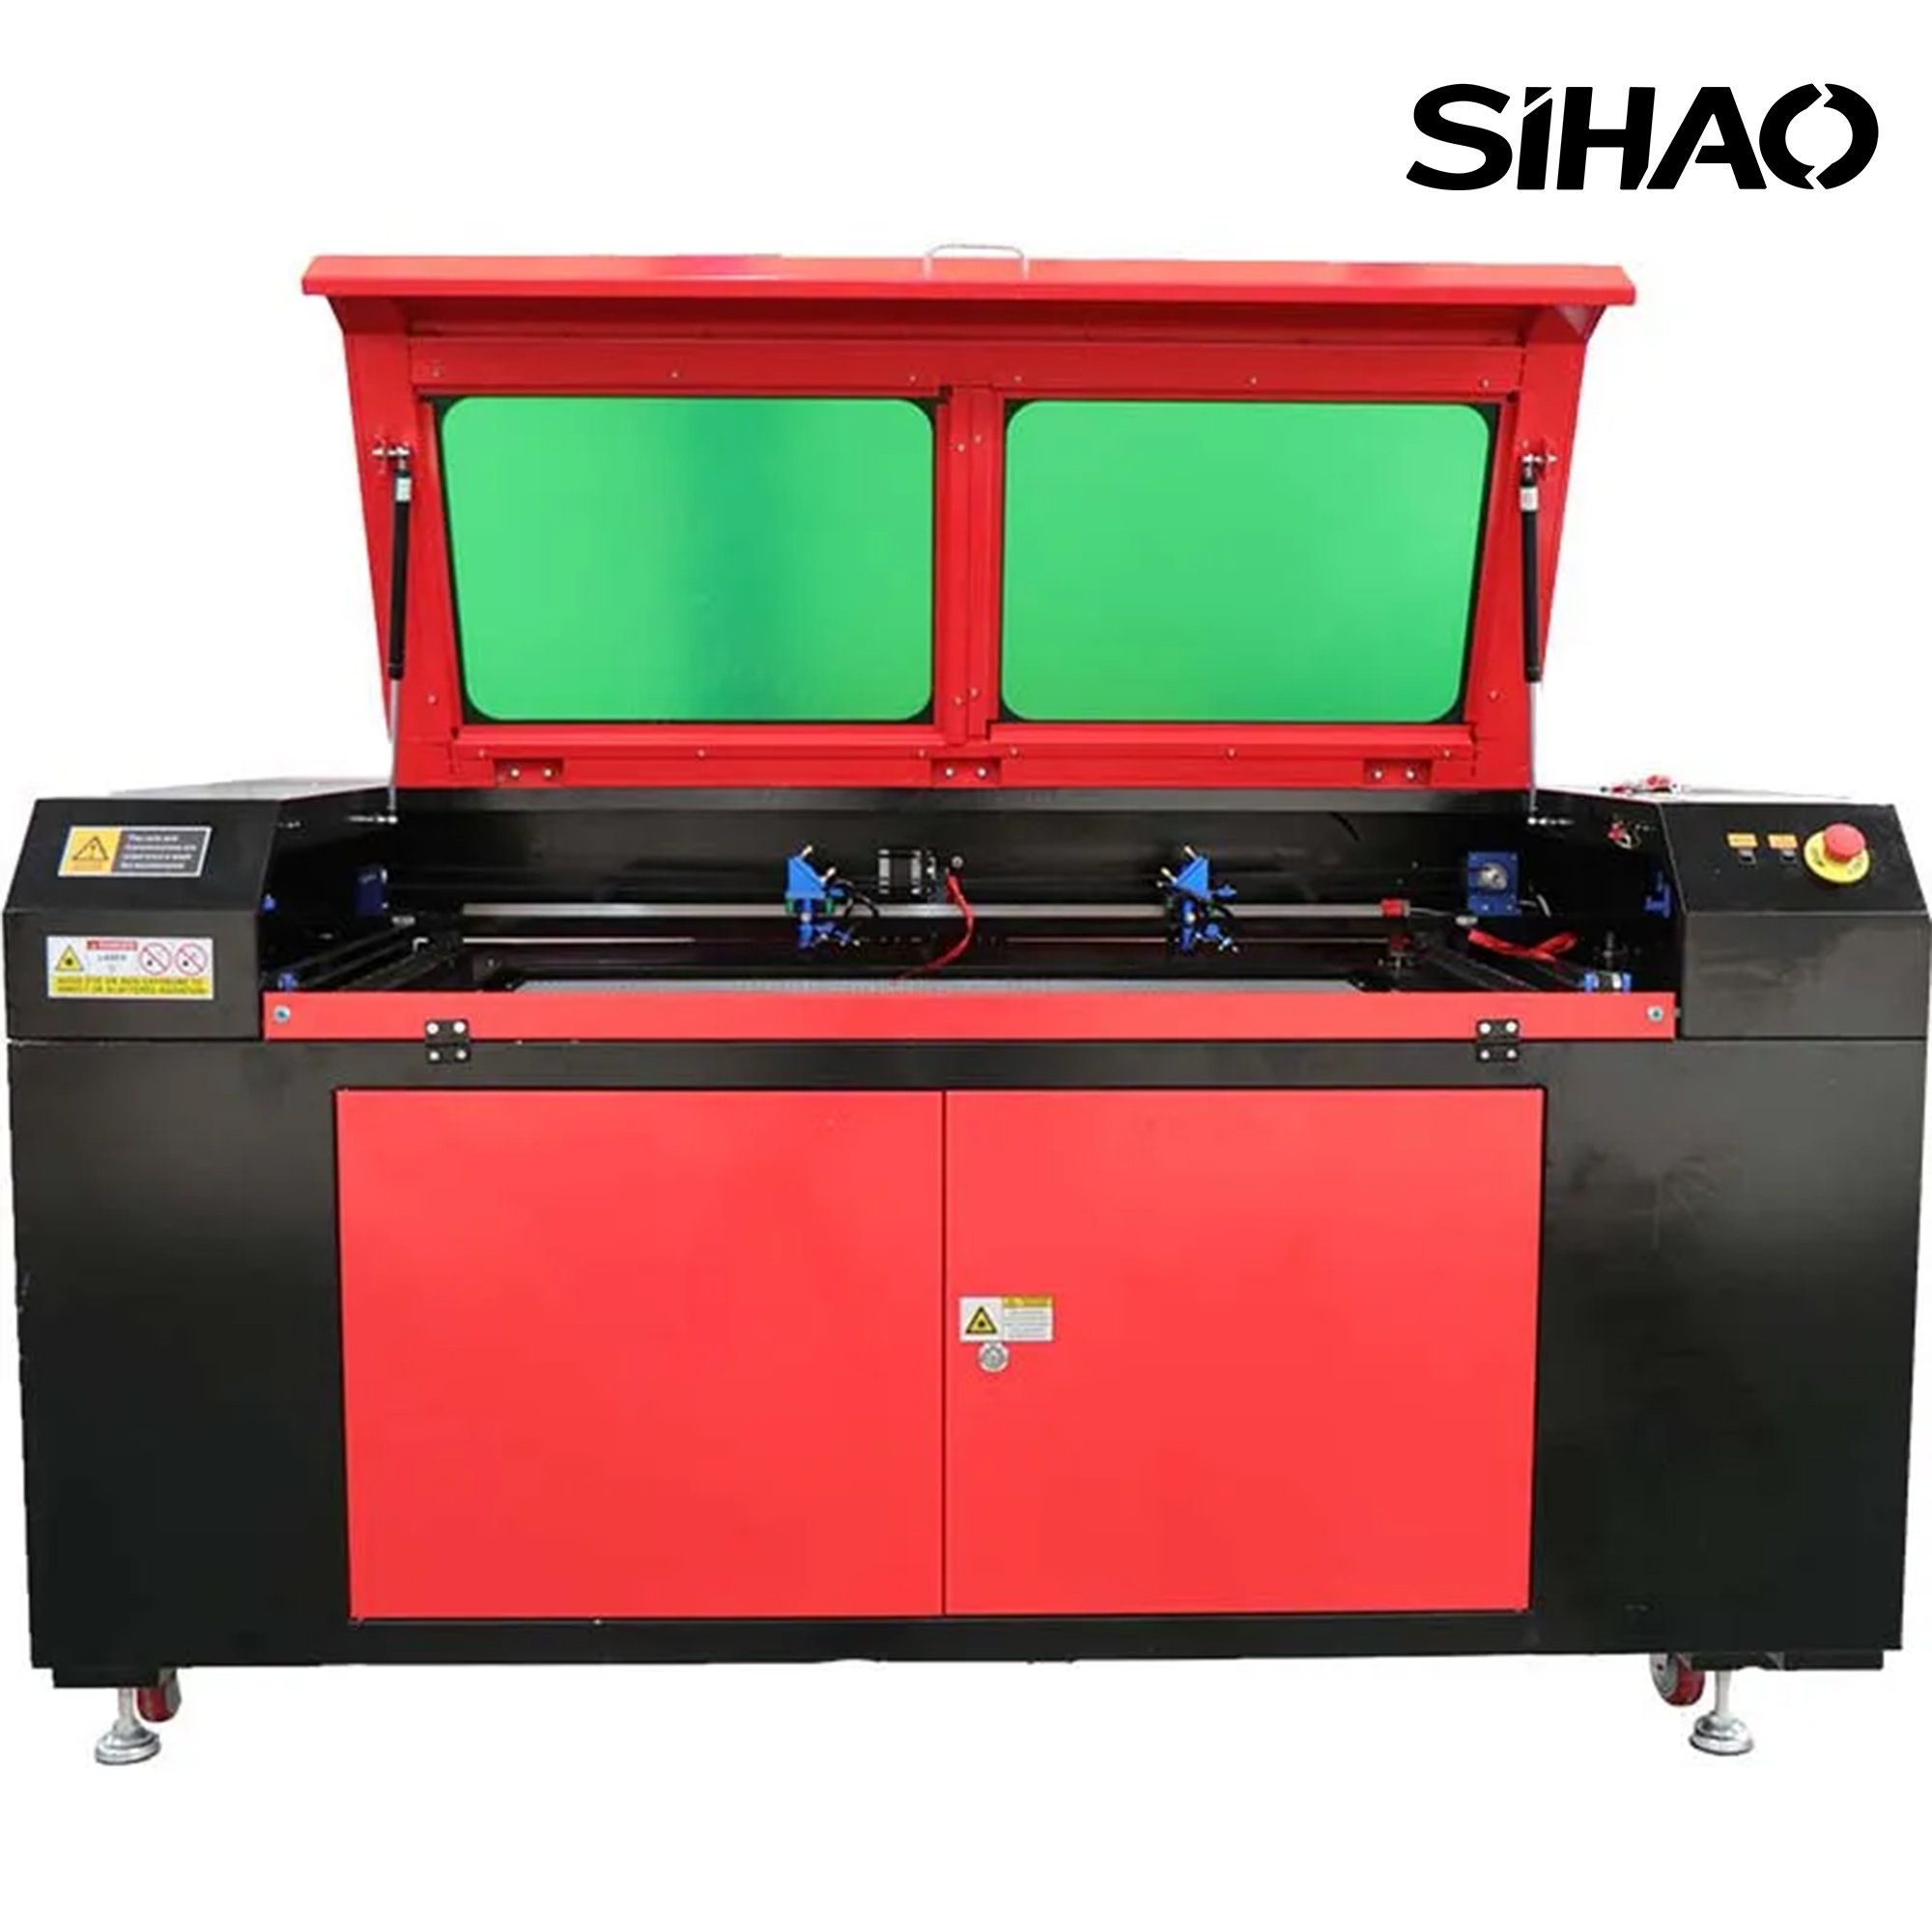 SIHAO 900X600MM 100W Laser Engraving Machine